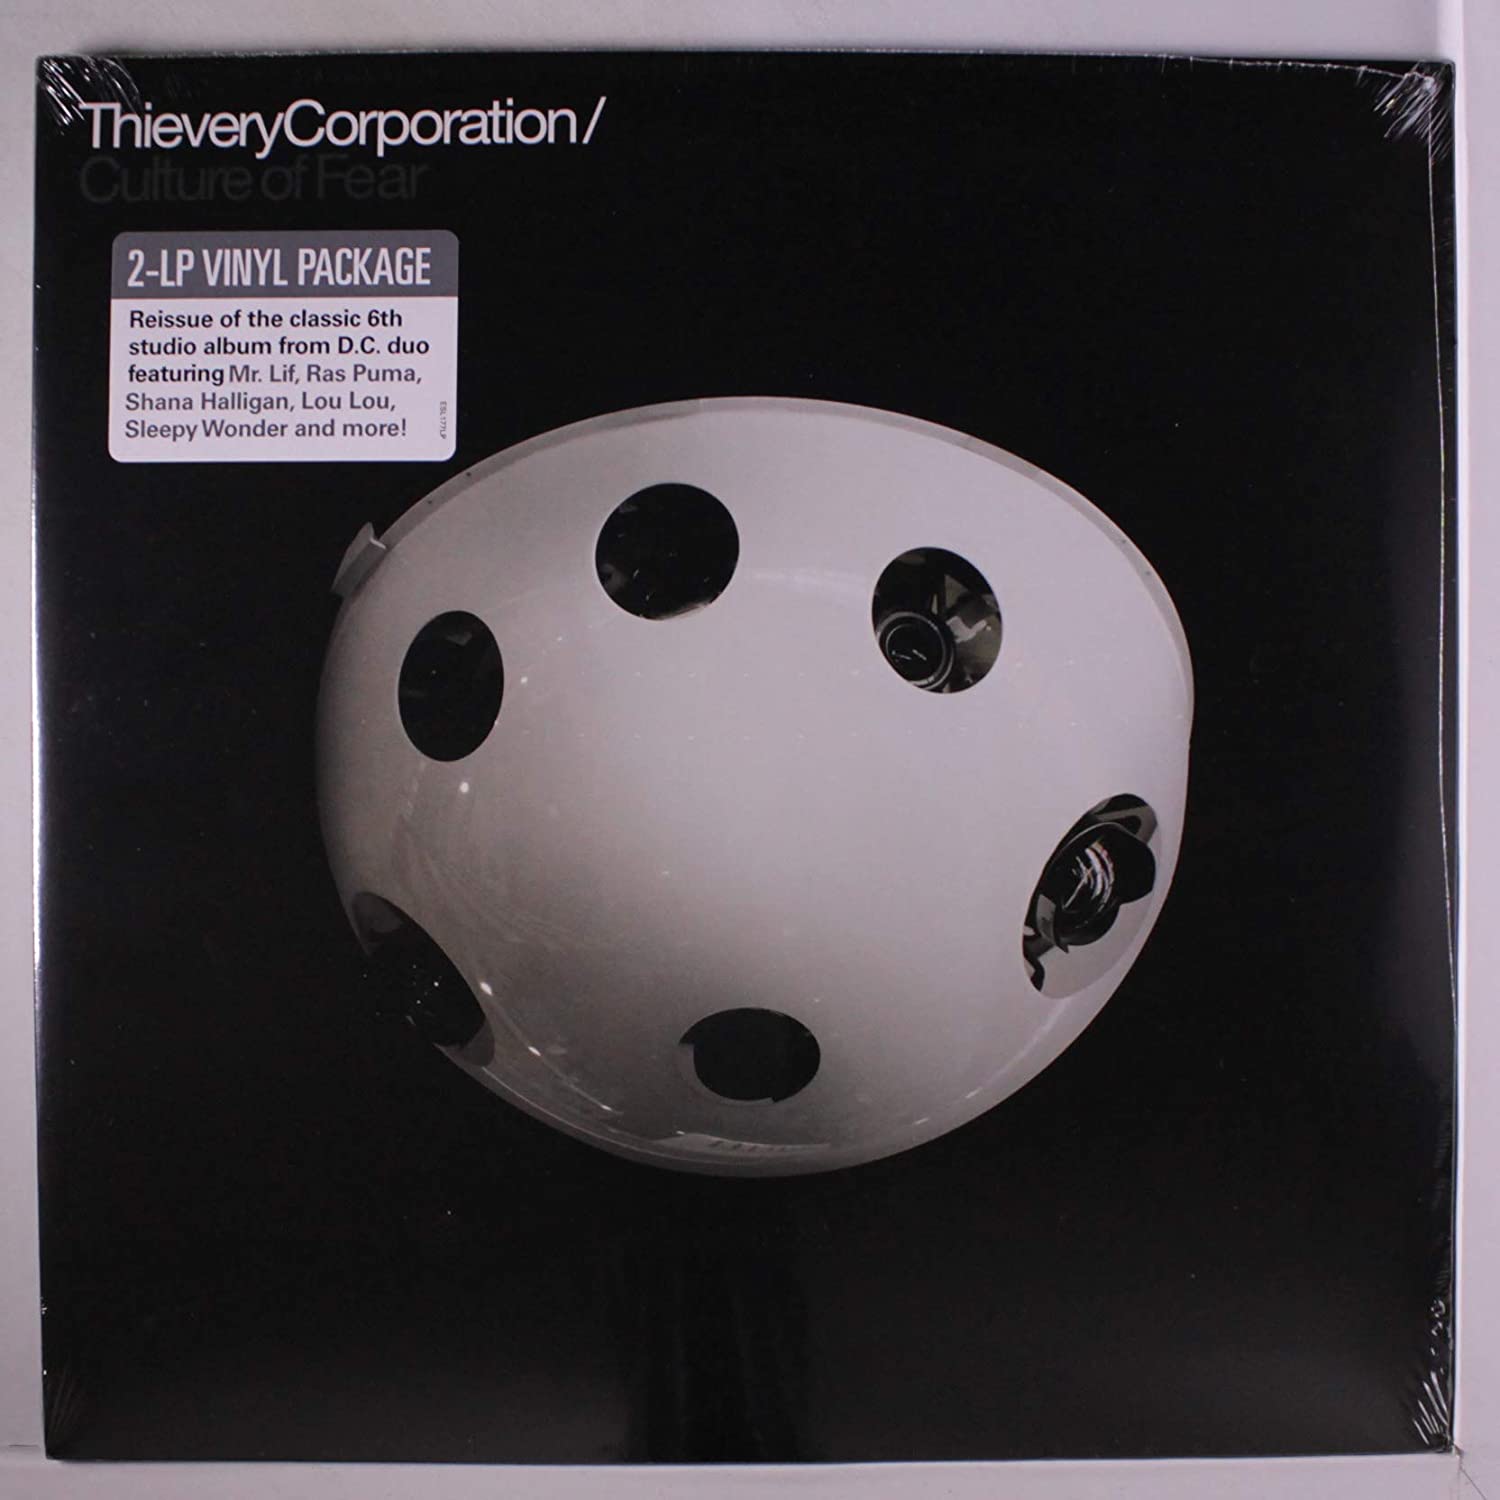 Thievery Corporation - Culture of Fear (Vinyl 2LP)